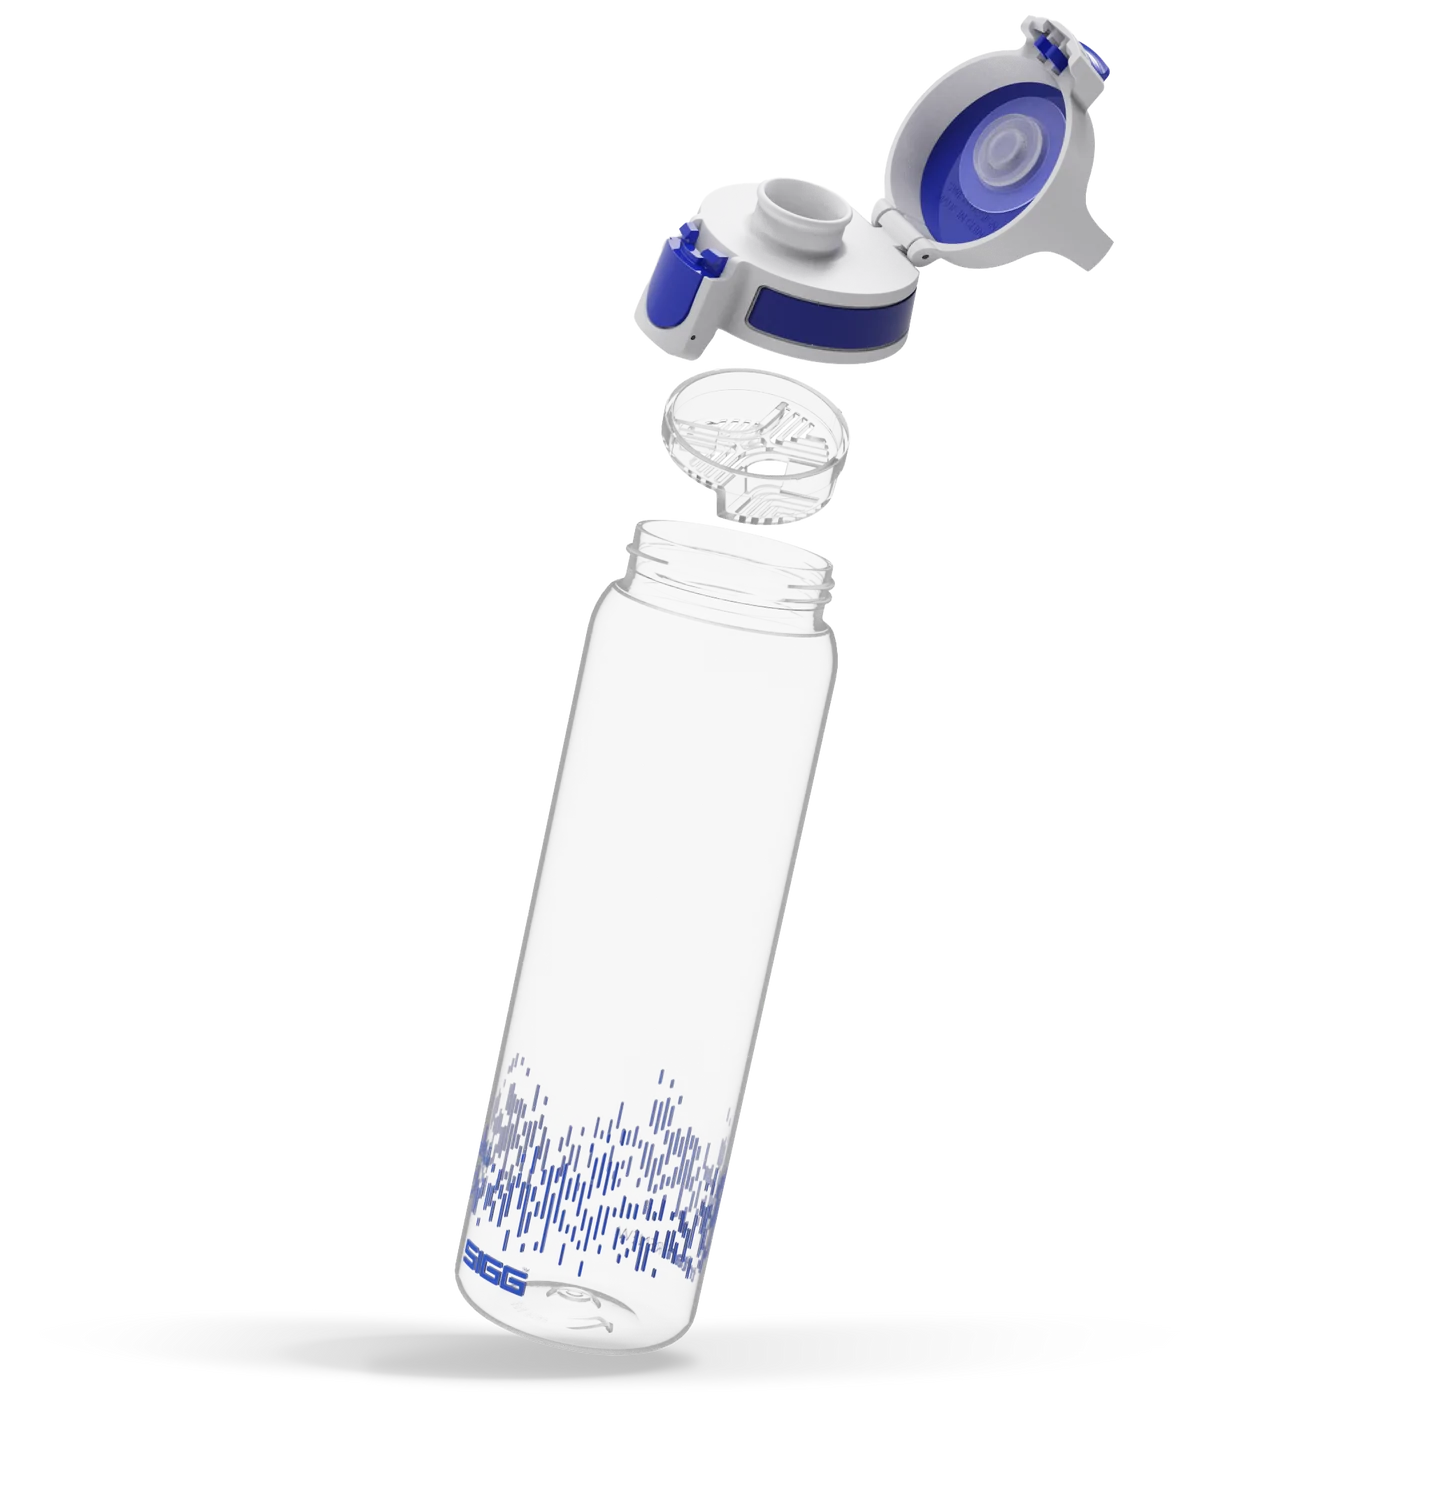 SIGG Total Clear ONE MyPlanet Bottle 0.75l - Tritan plastic Aqua 0.75l Cutlery